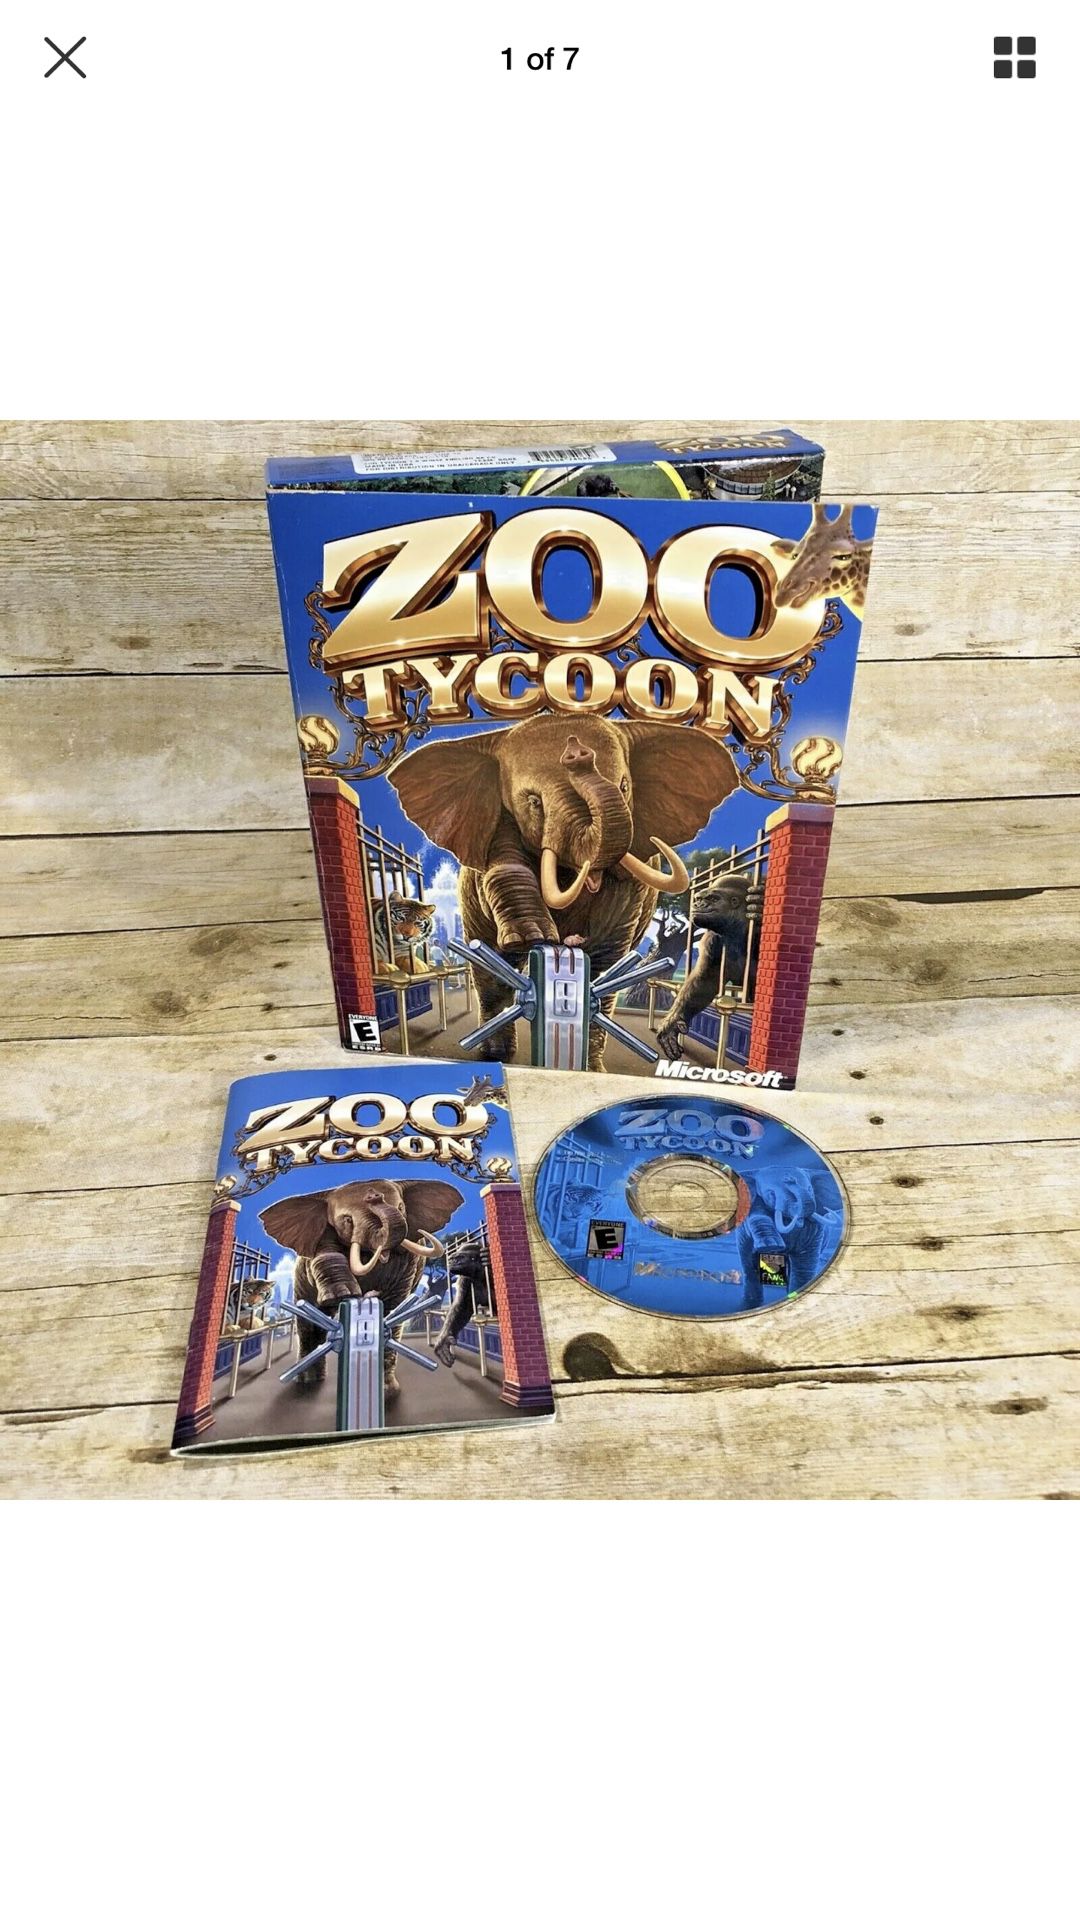 Zoo Tycoon PC 2001 Original Microsoft w/ Big Box, Manual, Disc Computer Game